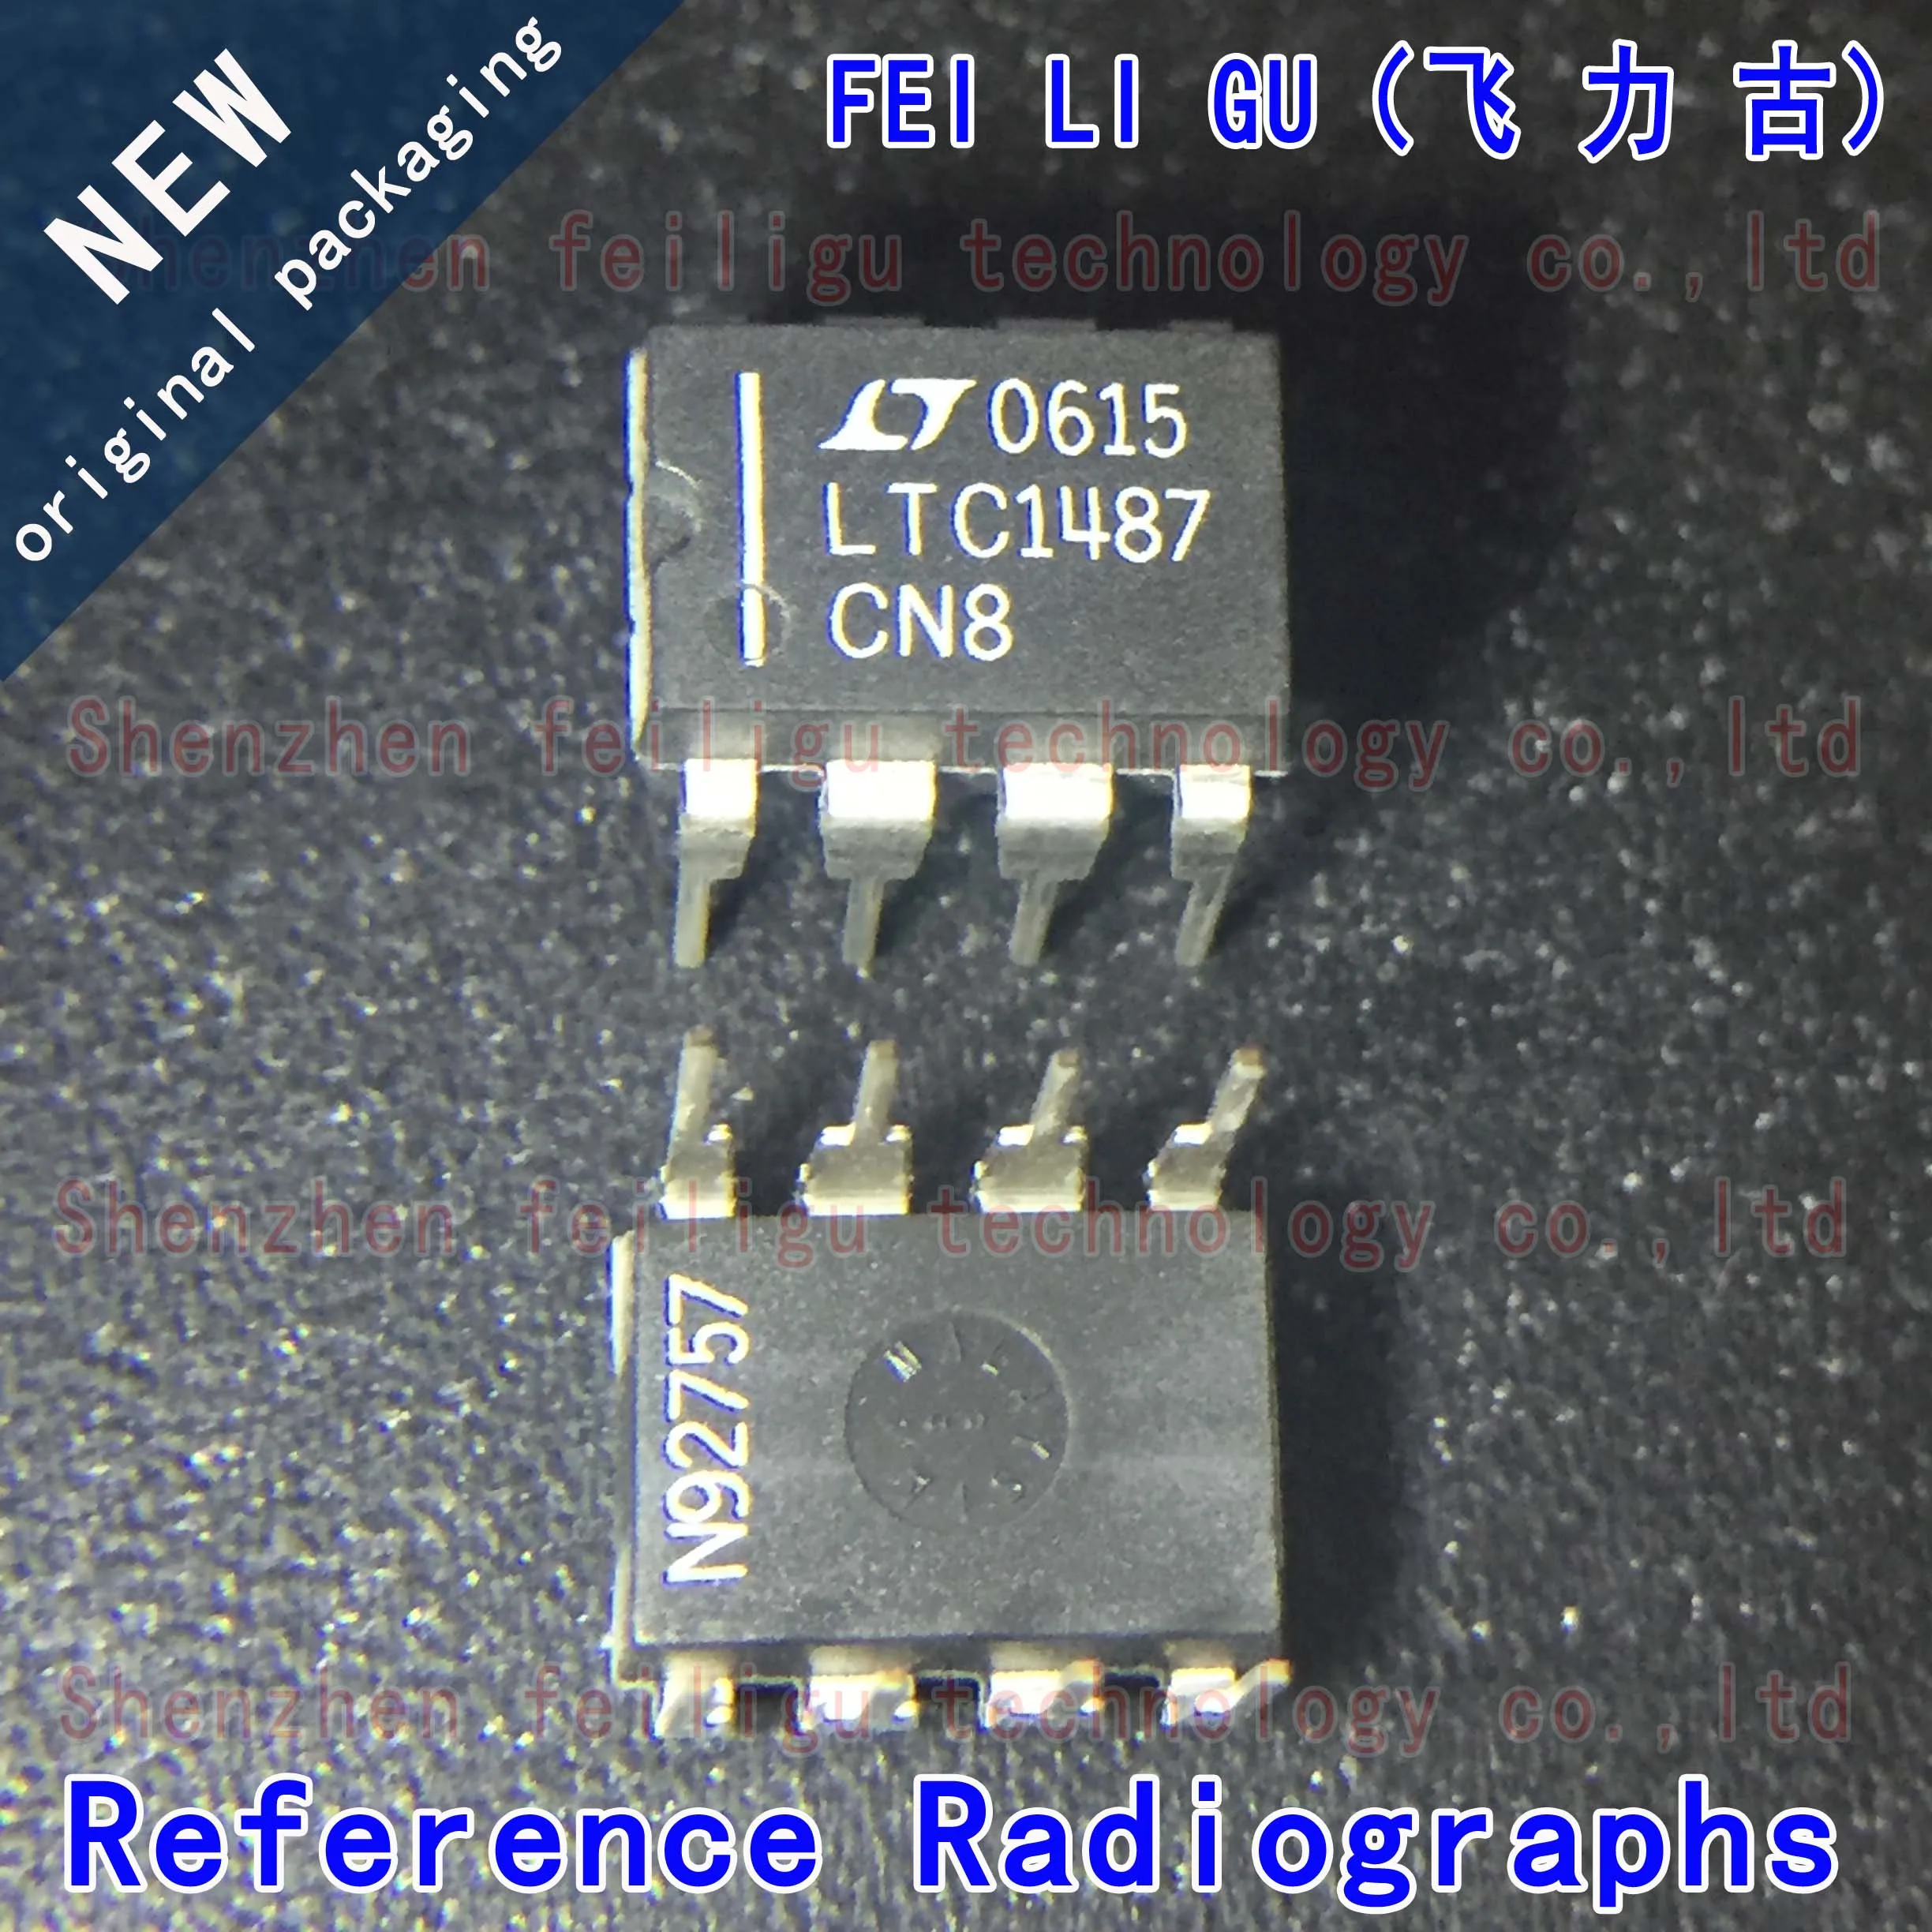 new original 5pcs x9c503p dip8 digital potentiometer ic chip integrated circuit good quality 1~30PCS 100% New original LTC1487CN8#PBF LTC1487CN8 LTC1487 Package:DIP8 Inline RS-485/RS-422 Transceiver Chip